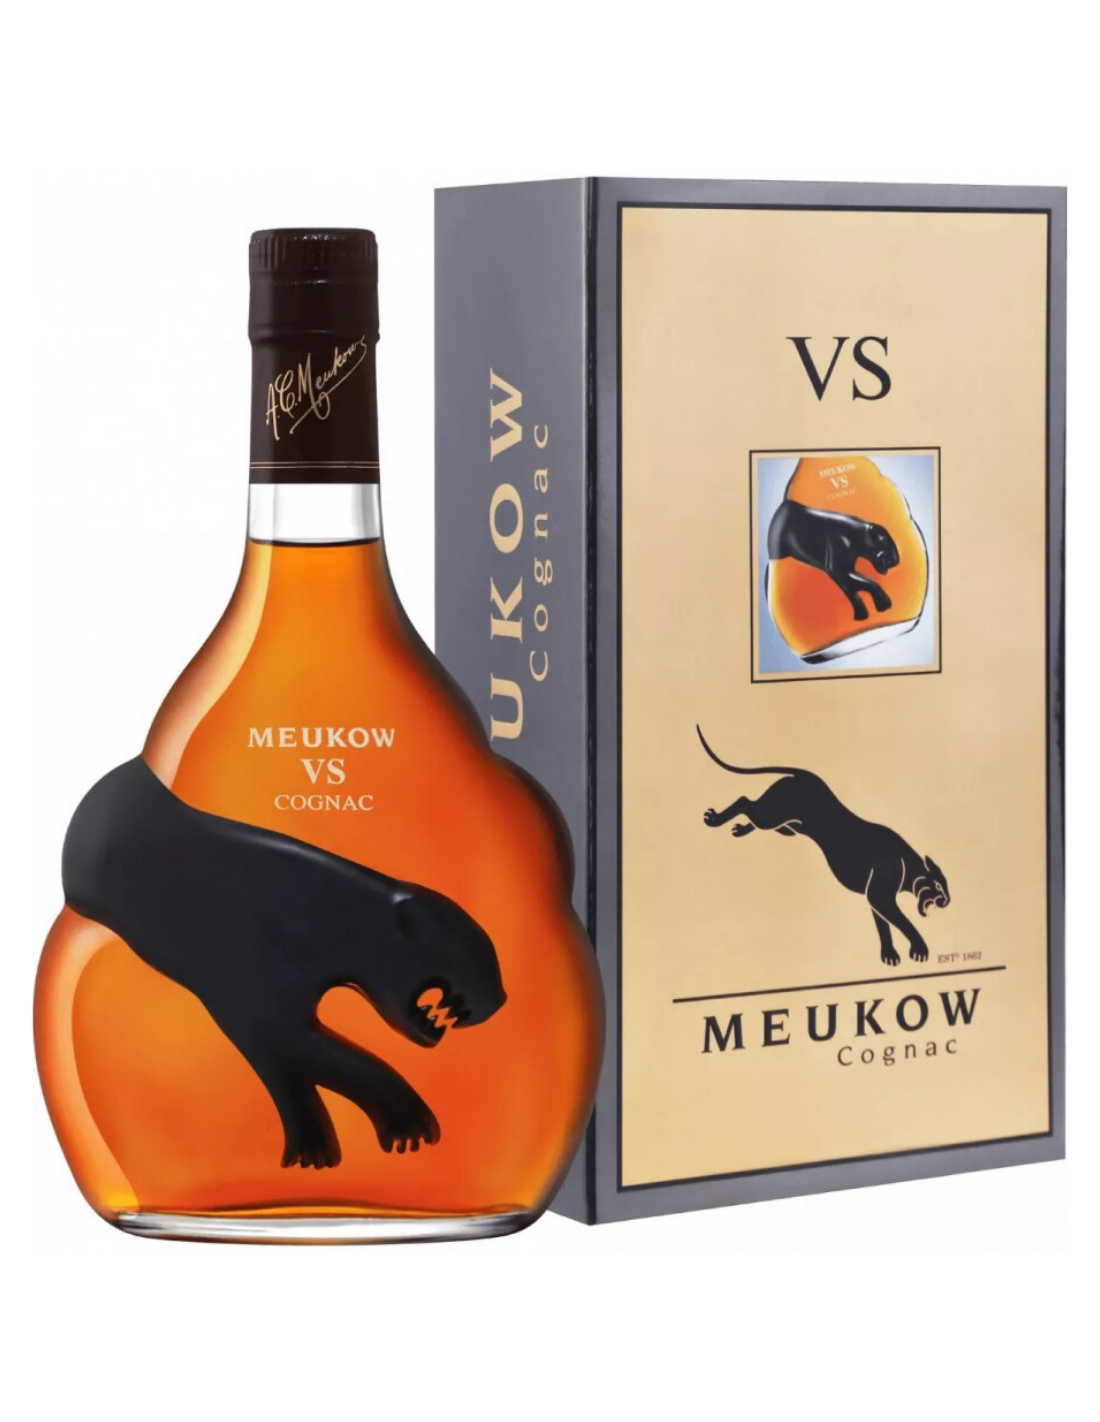 Coniac Meukow VS, 40% alc., 0.7L, Franta alcooldiscount.ro